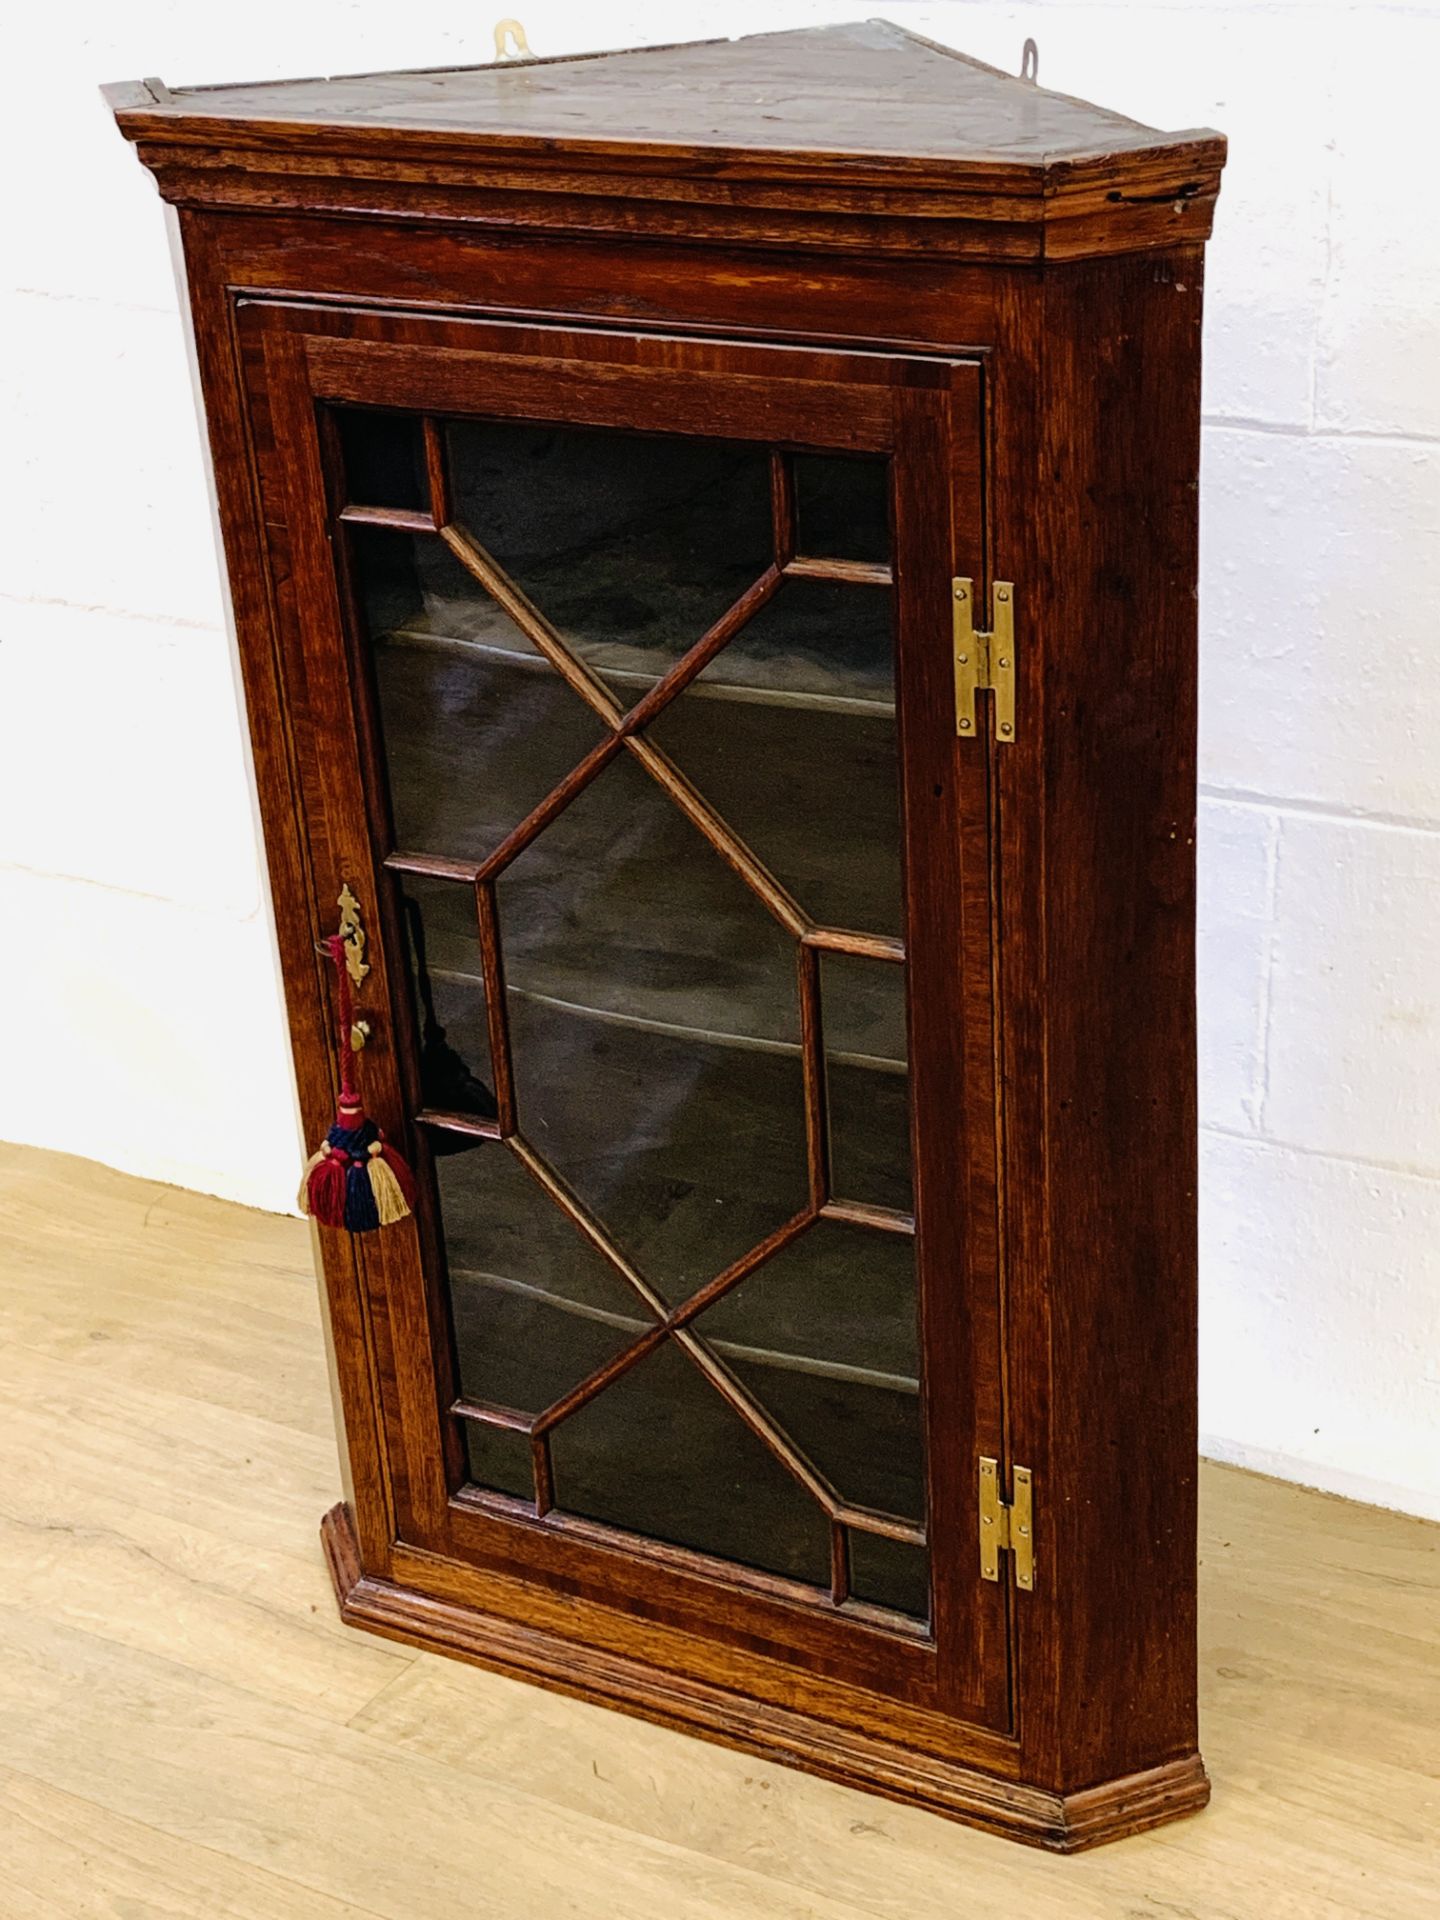 Mahogany glass fronted corner display cabinet - Image 3 of 4